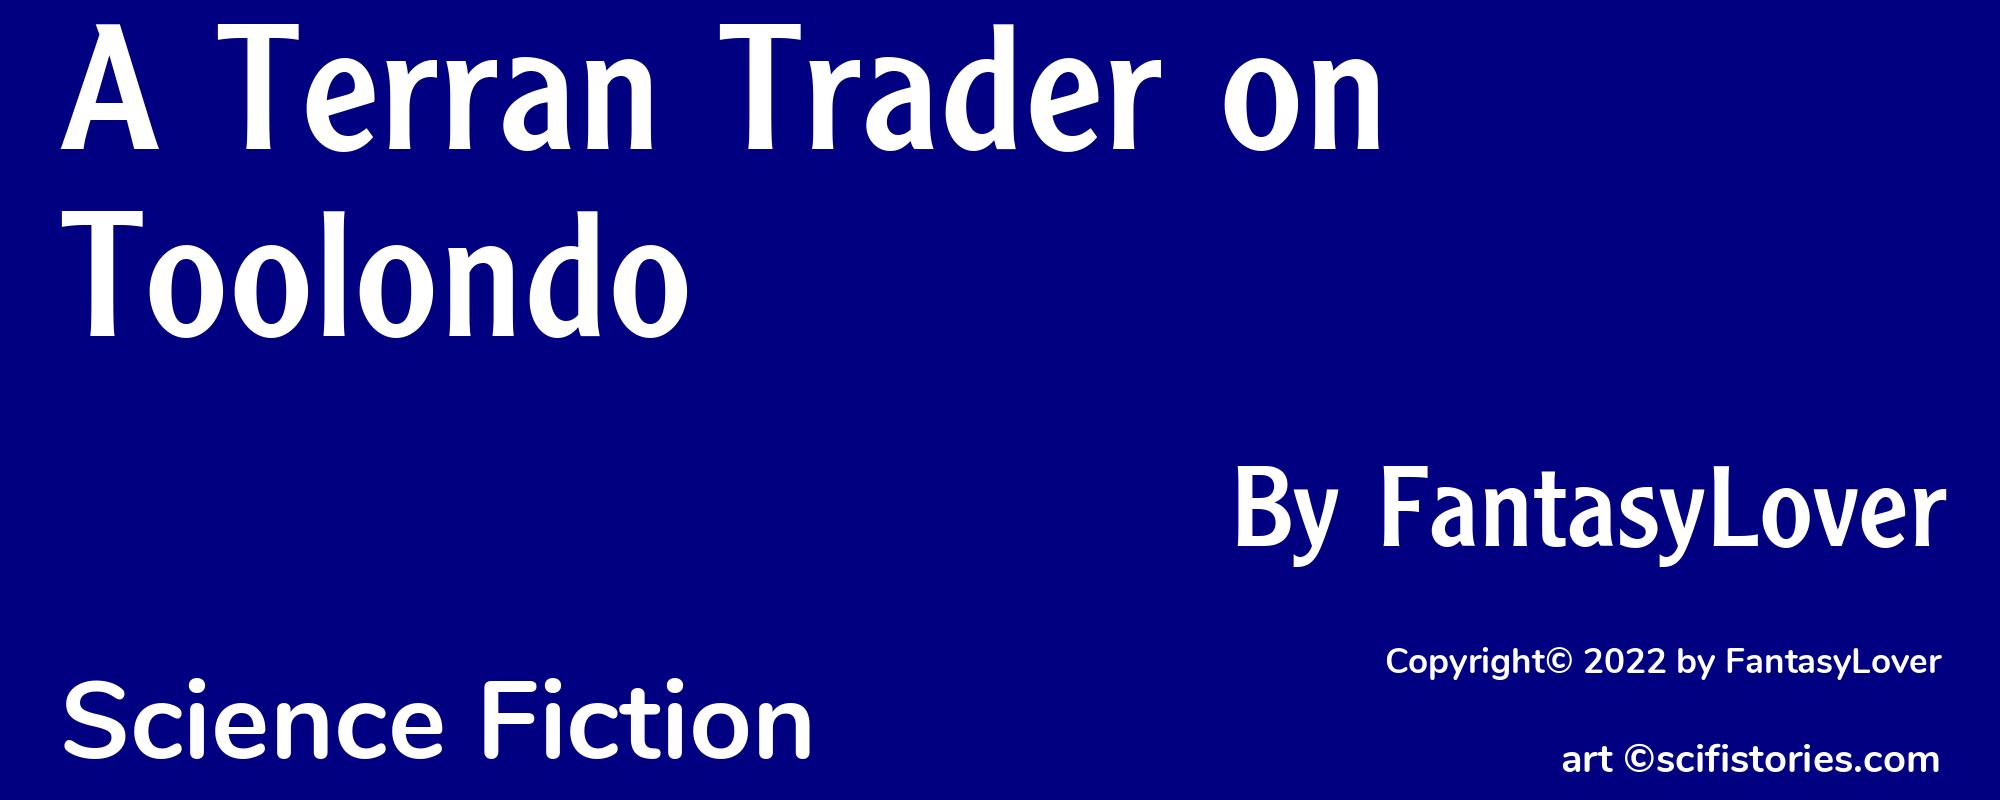 A Terran Trader on Toolondo - Cover